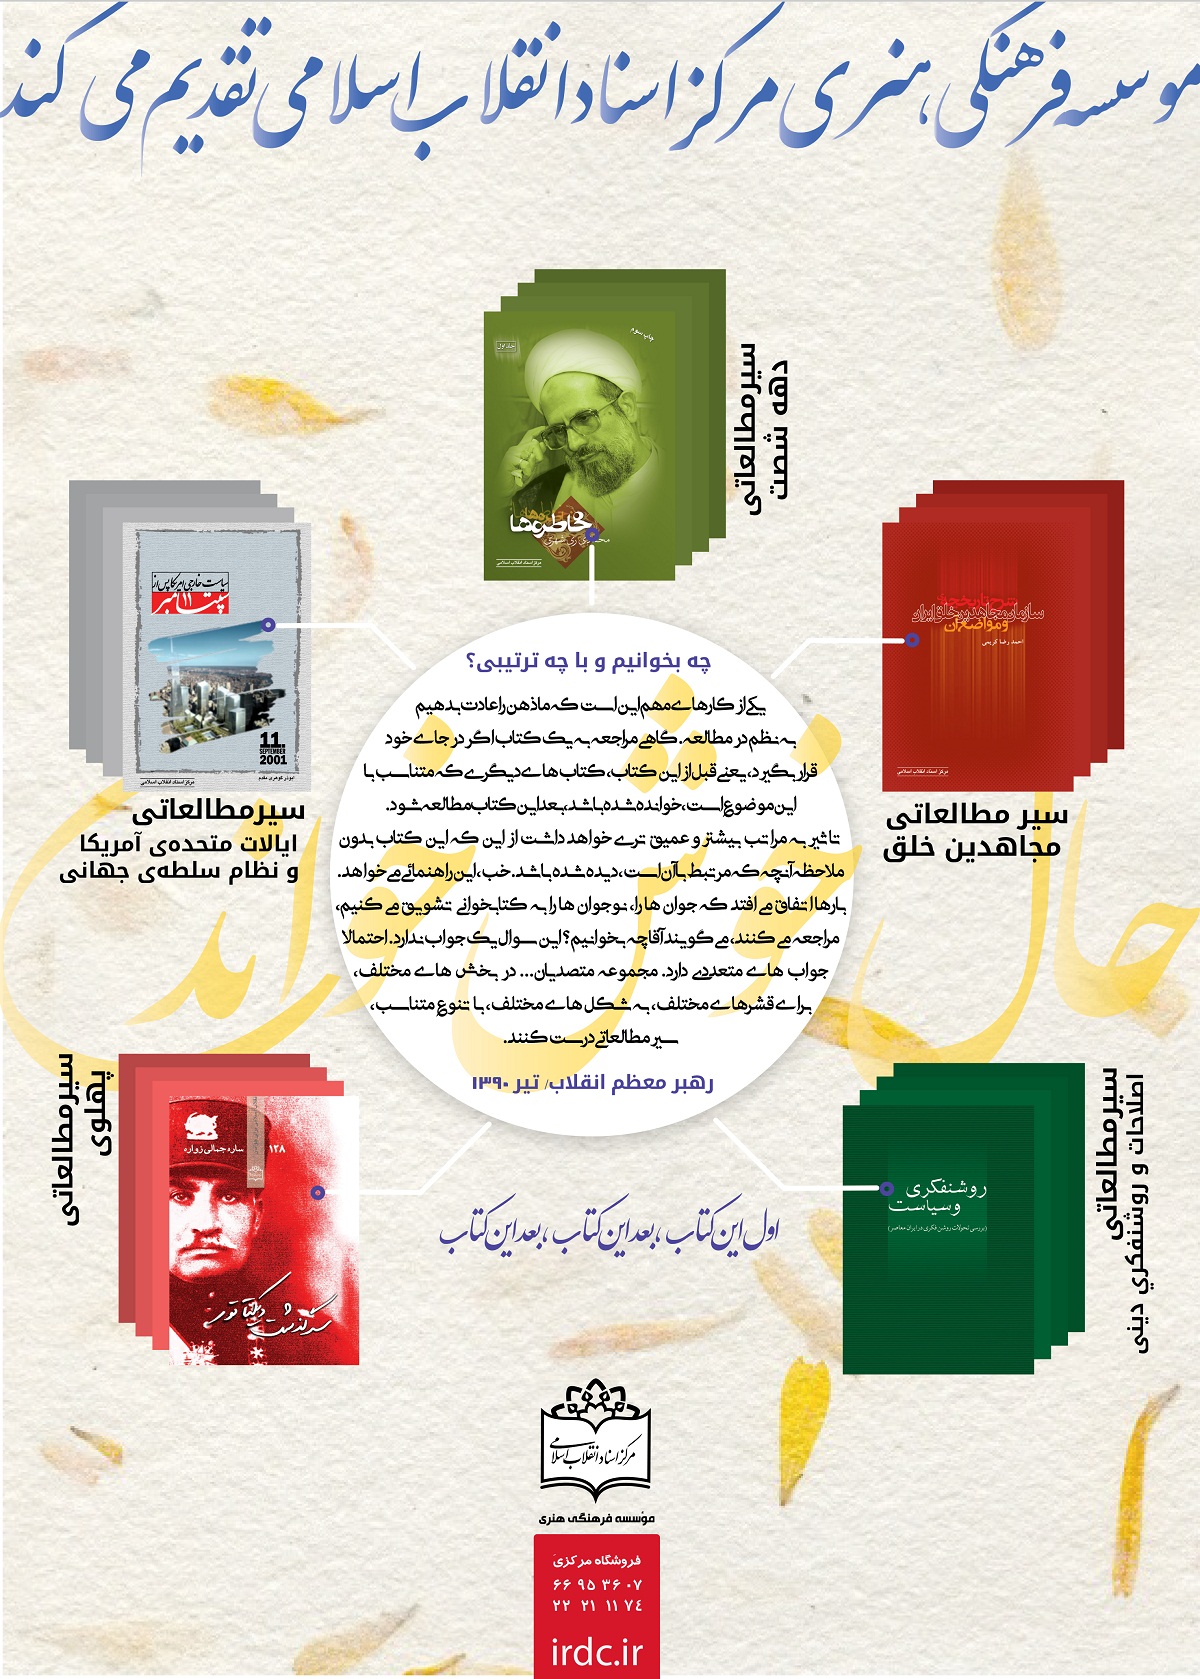 مؤسسه فرهنگی هنری مرکز اسناد انقلاب اسلامی سیر مطالعاتی تدوین می‌کند